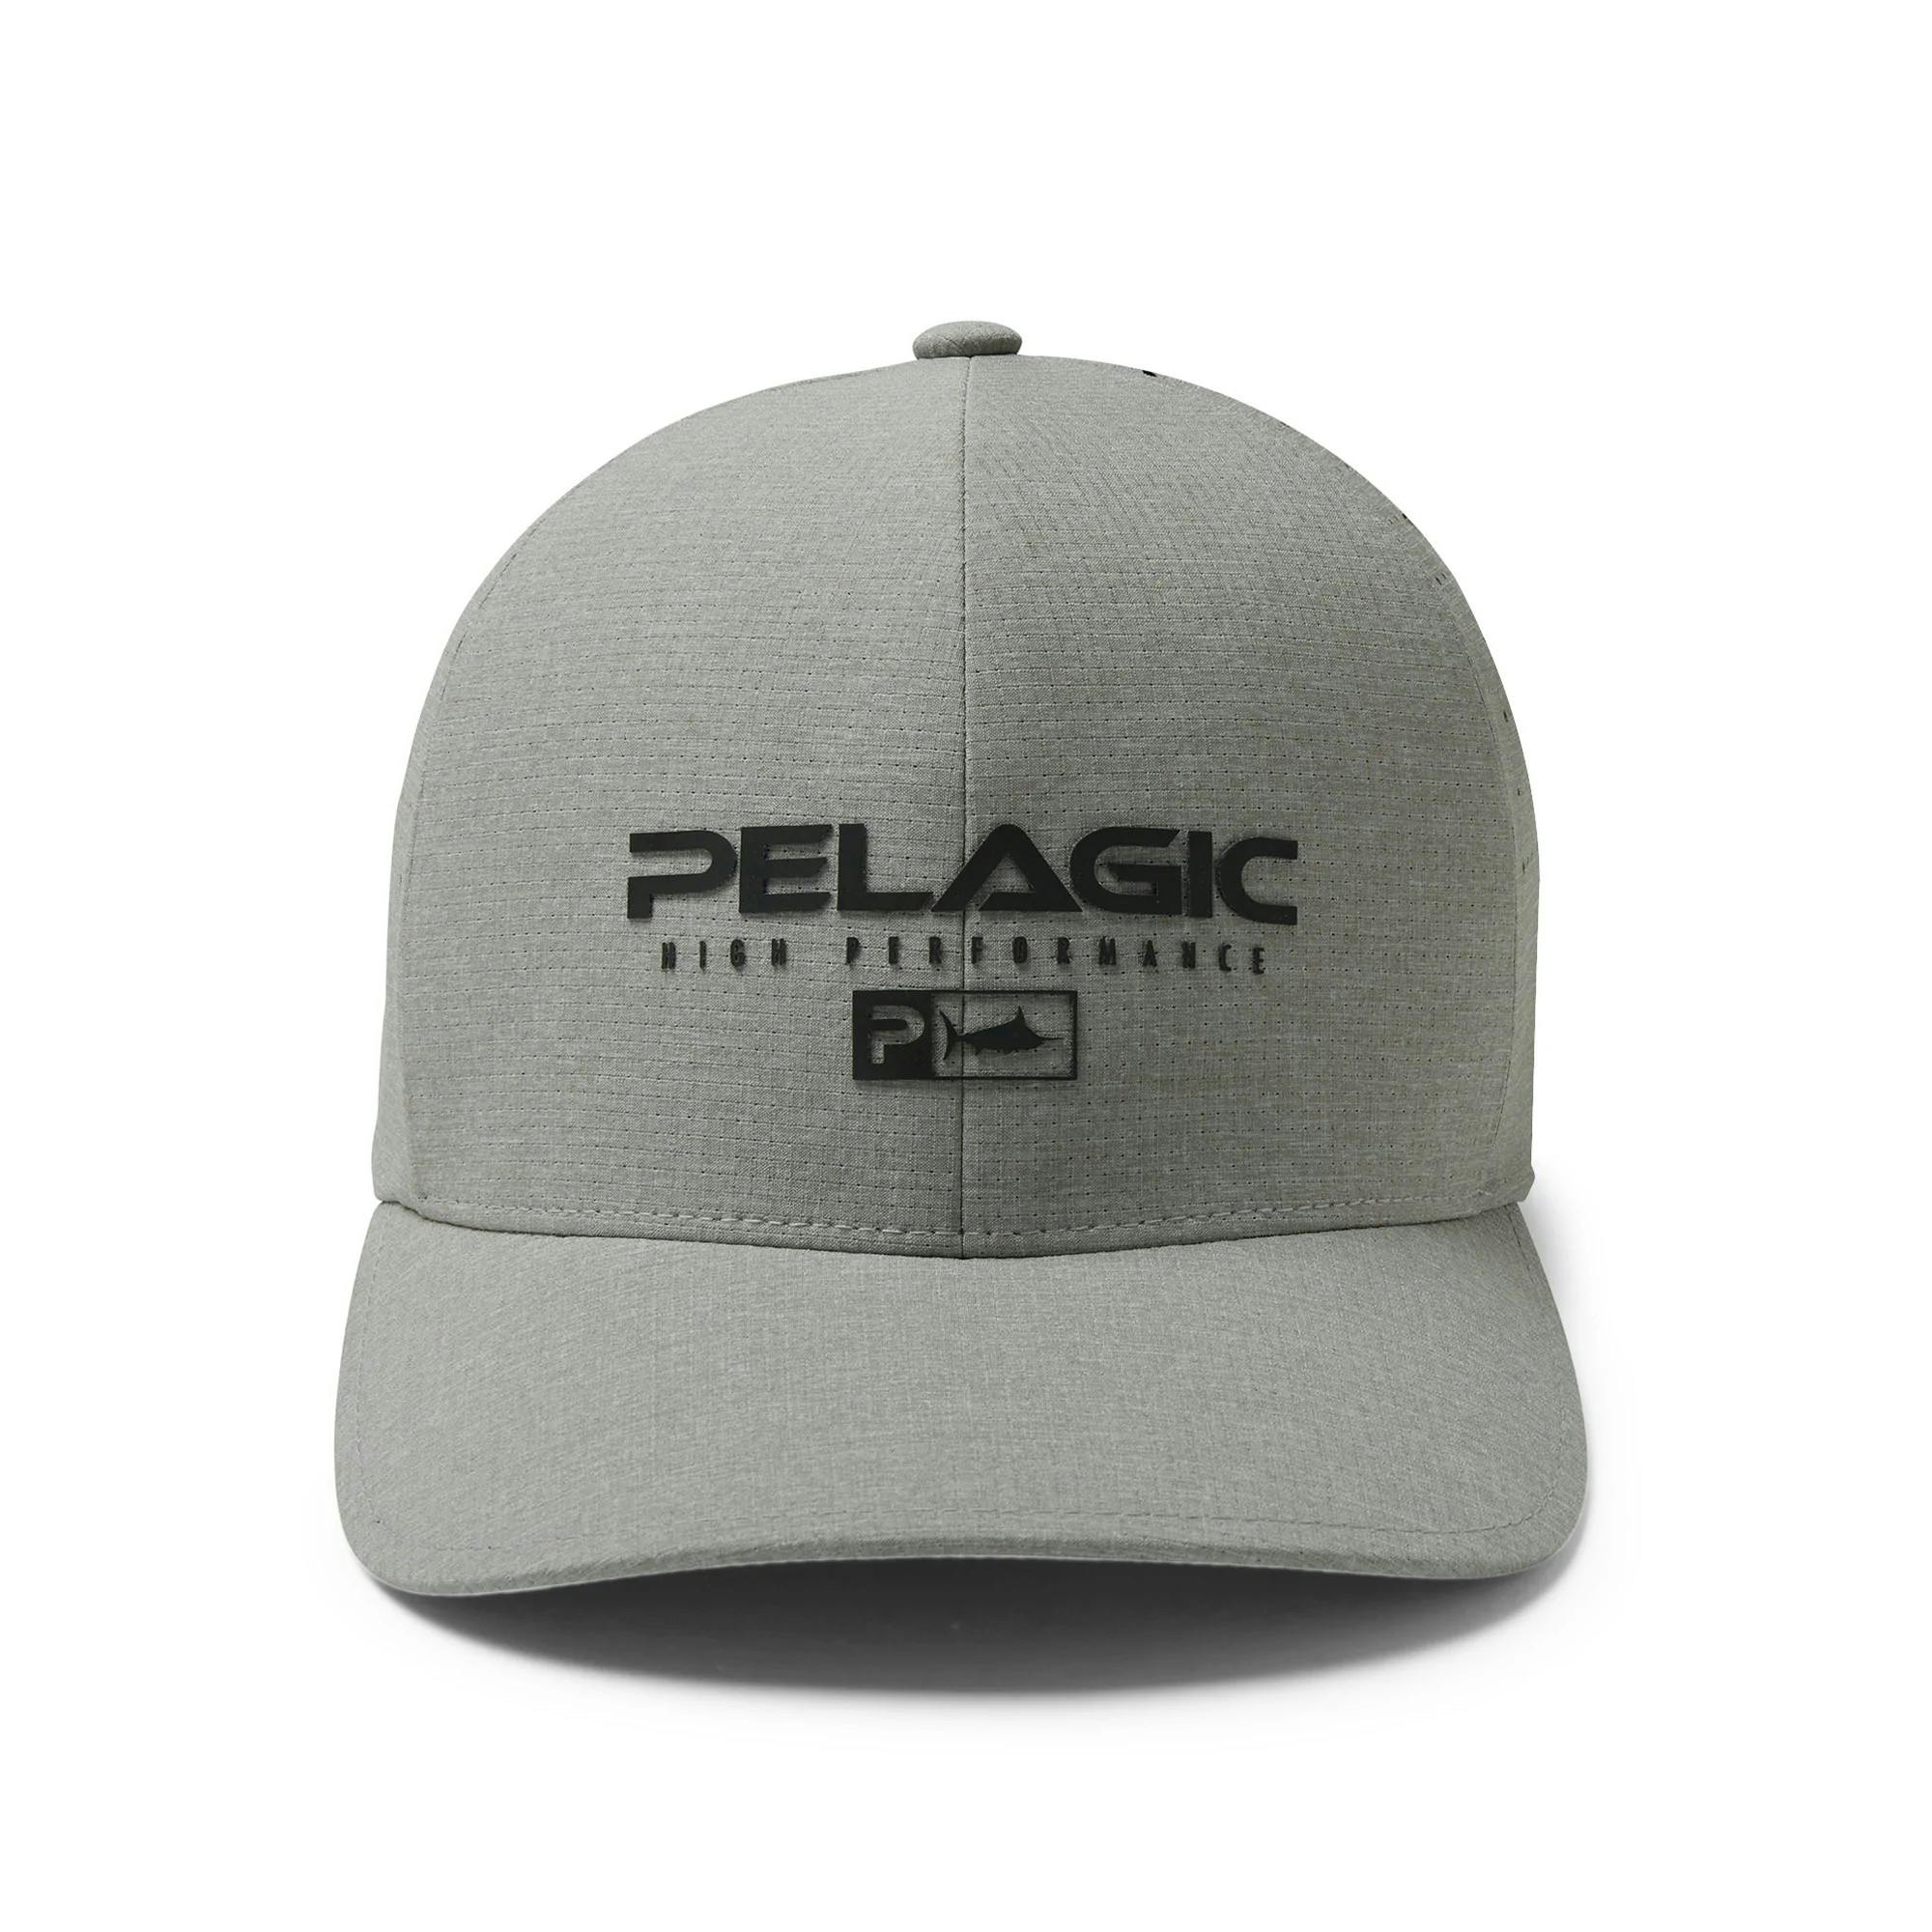 Pelagic Delta Flexfit Heathered Hat Front - Light Grey